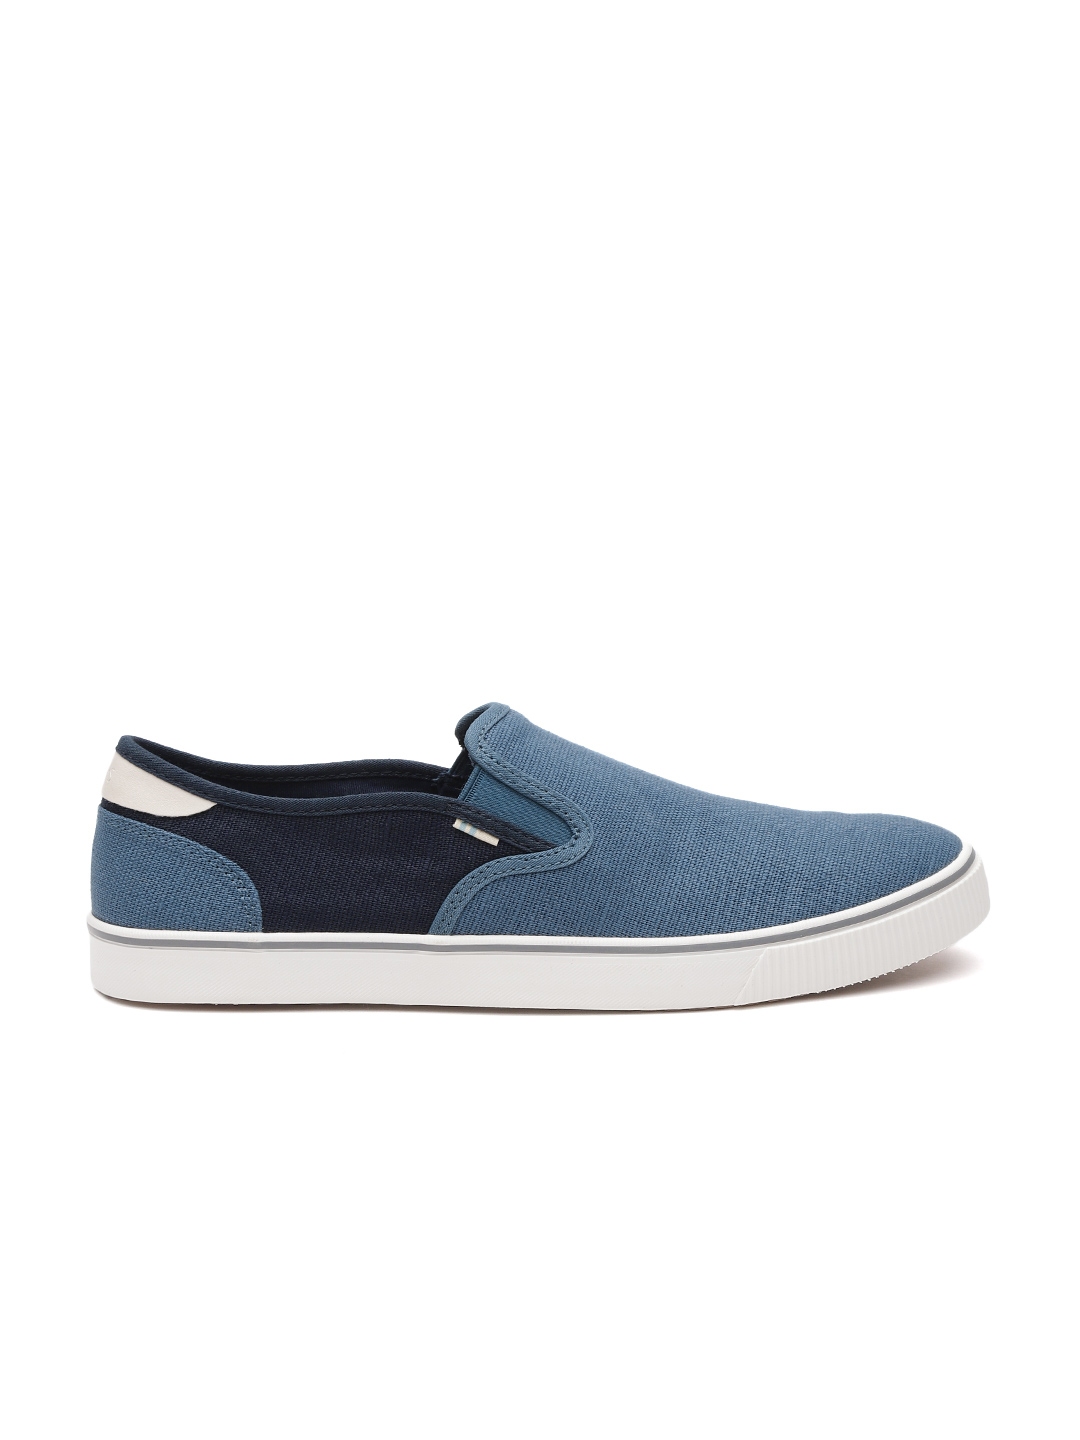 Buy TOMS Men Blue Colourblocked Slip On Sneakers - Casual Shoes for Men ...